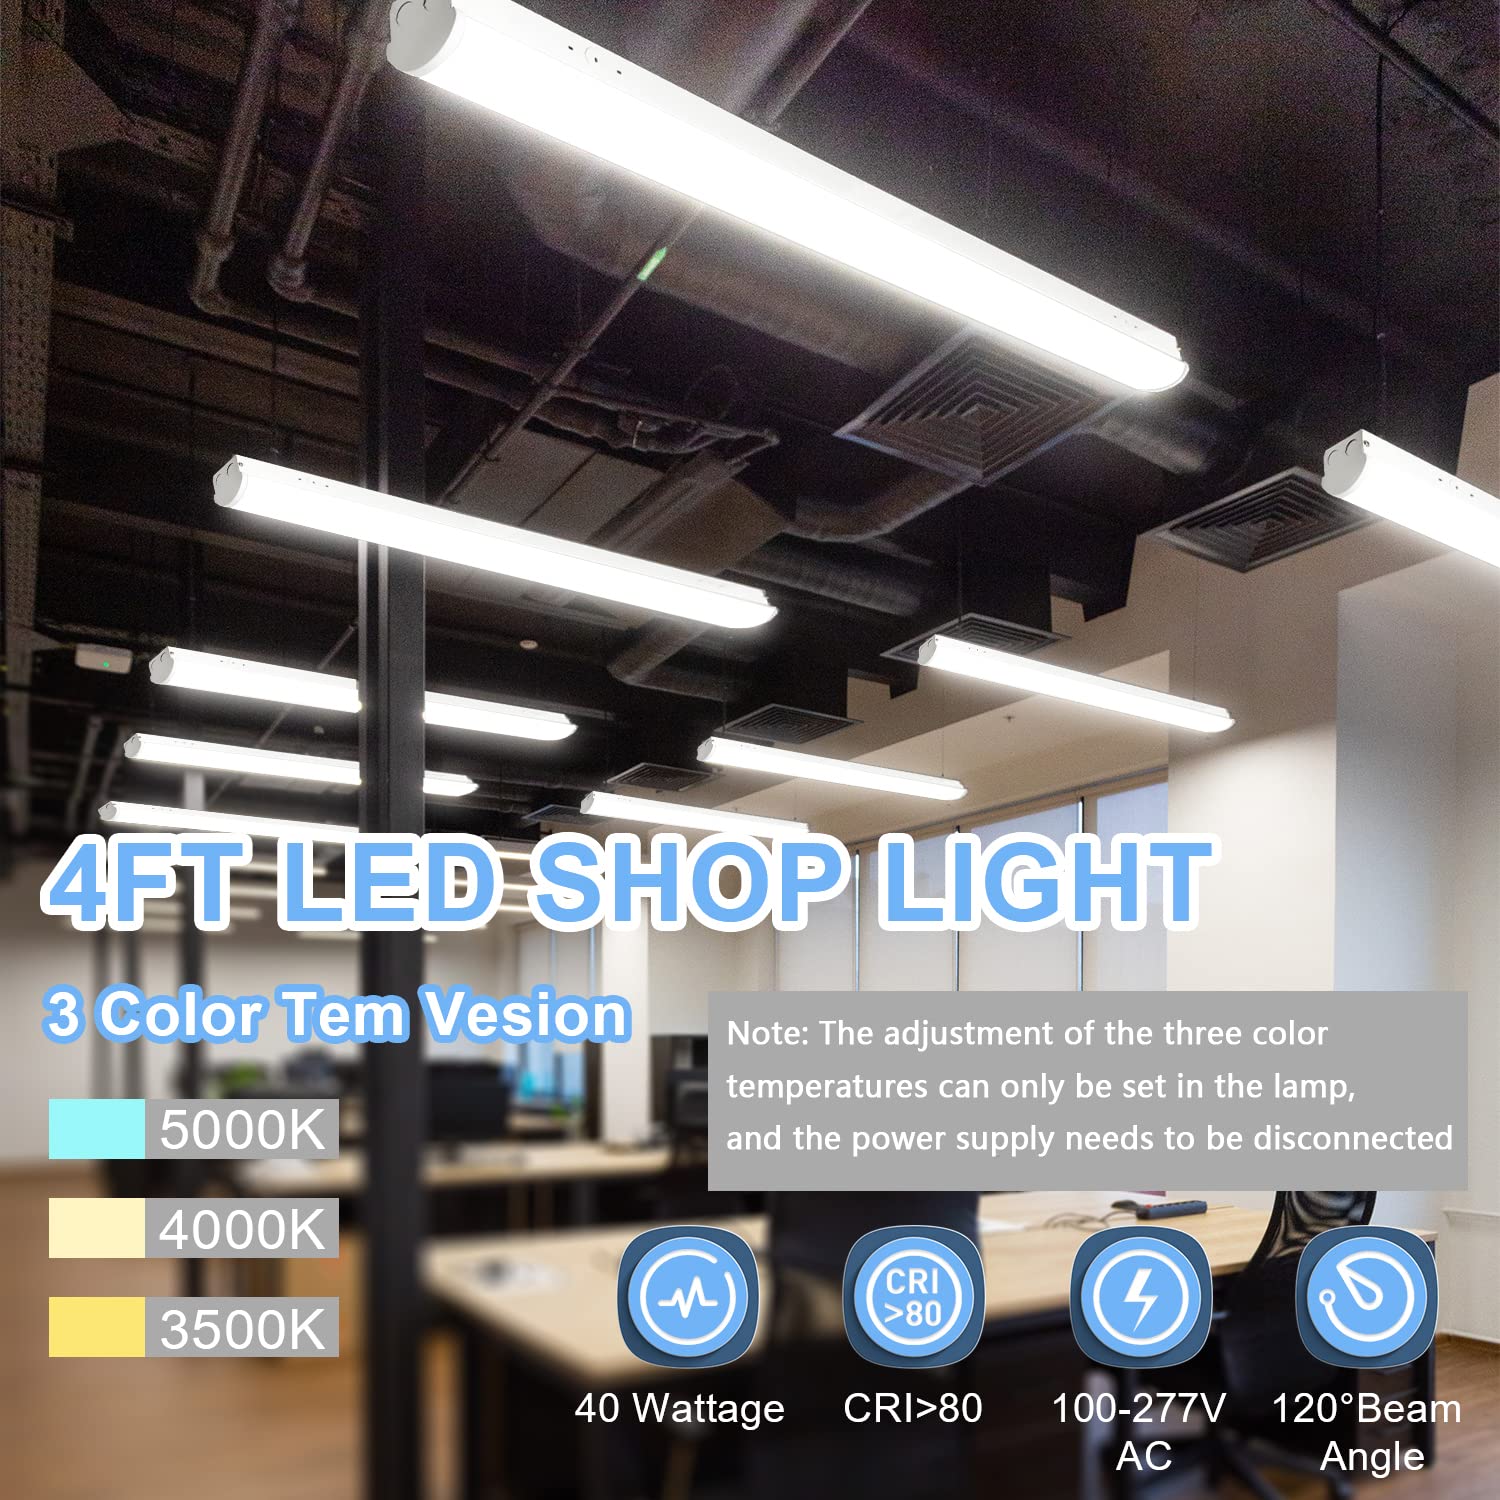 40W LED Linear Strip Light, 4FT LED Linear Shop Light, 3 Color Options 3500K/4000K/5000K, 0-10V Dimmable Surface Mount LED Ceiling Light, 5200 Lumens,DLC&ETL Listed 4 Pack